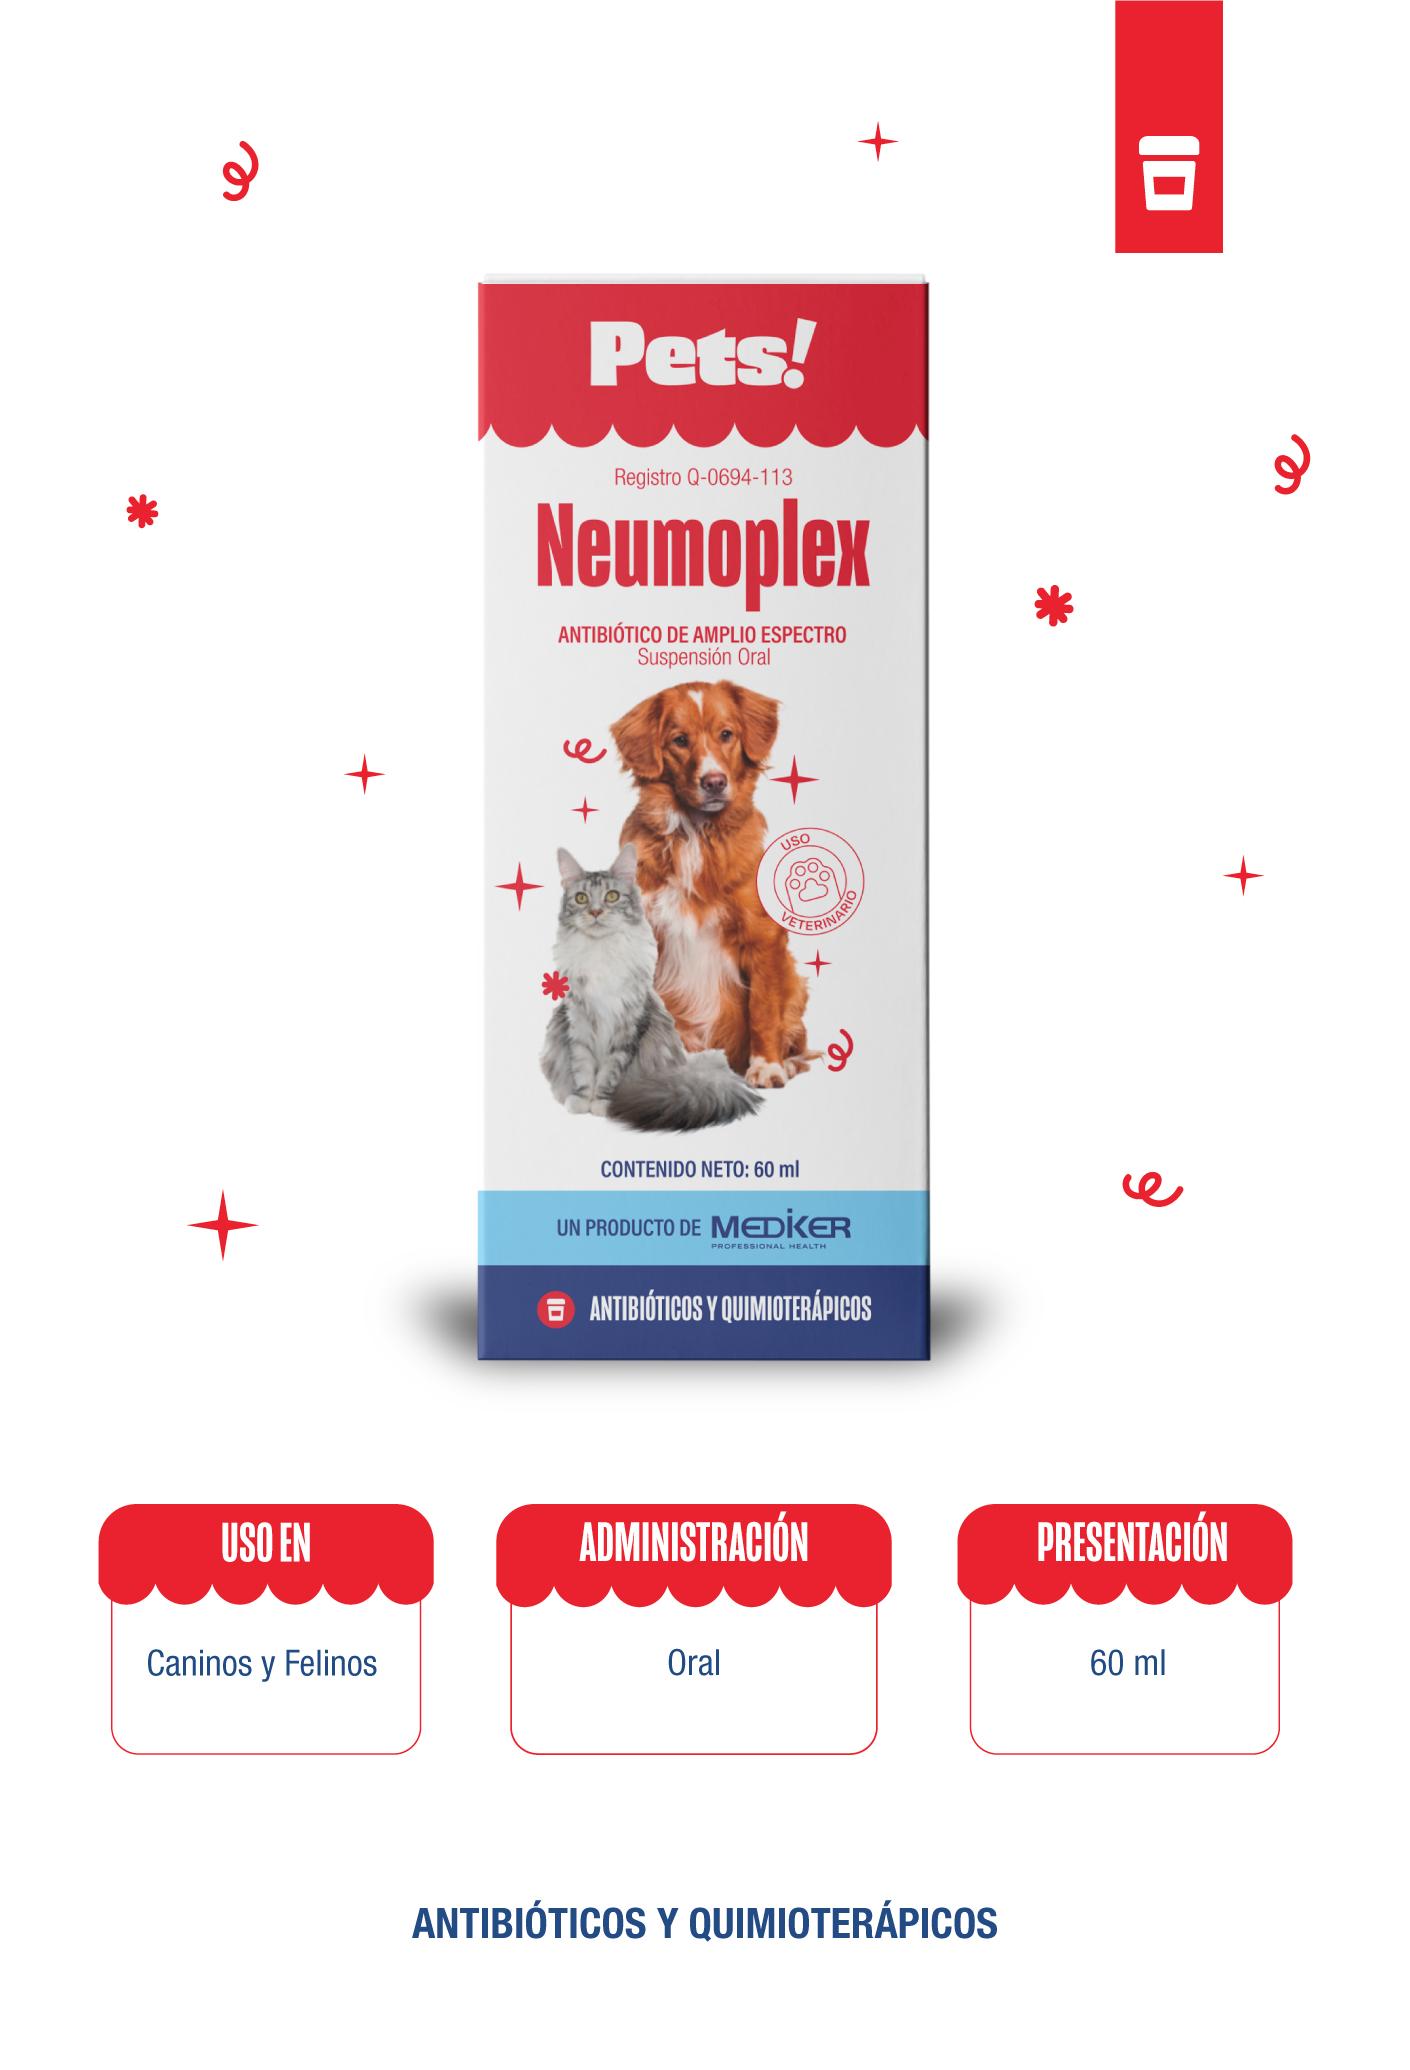 Pets Neumoplex ficha técnica